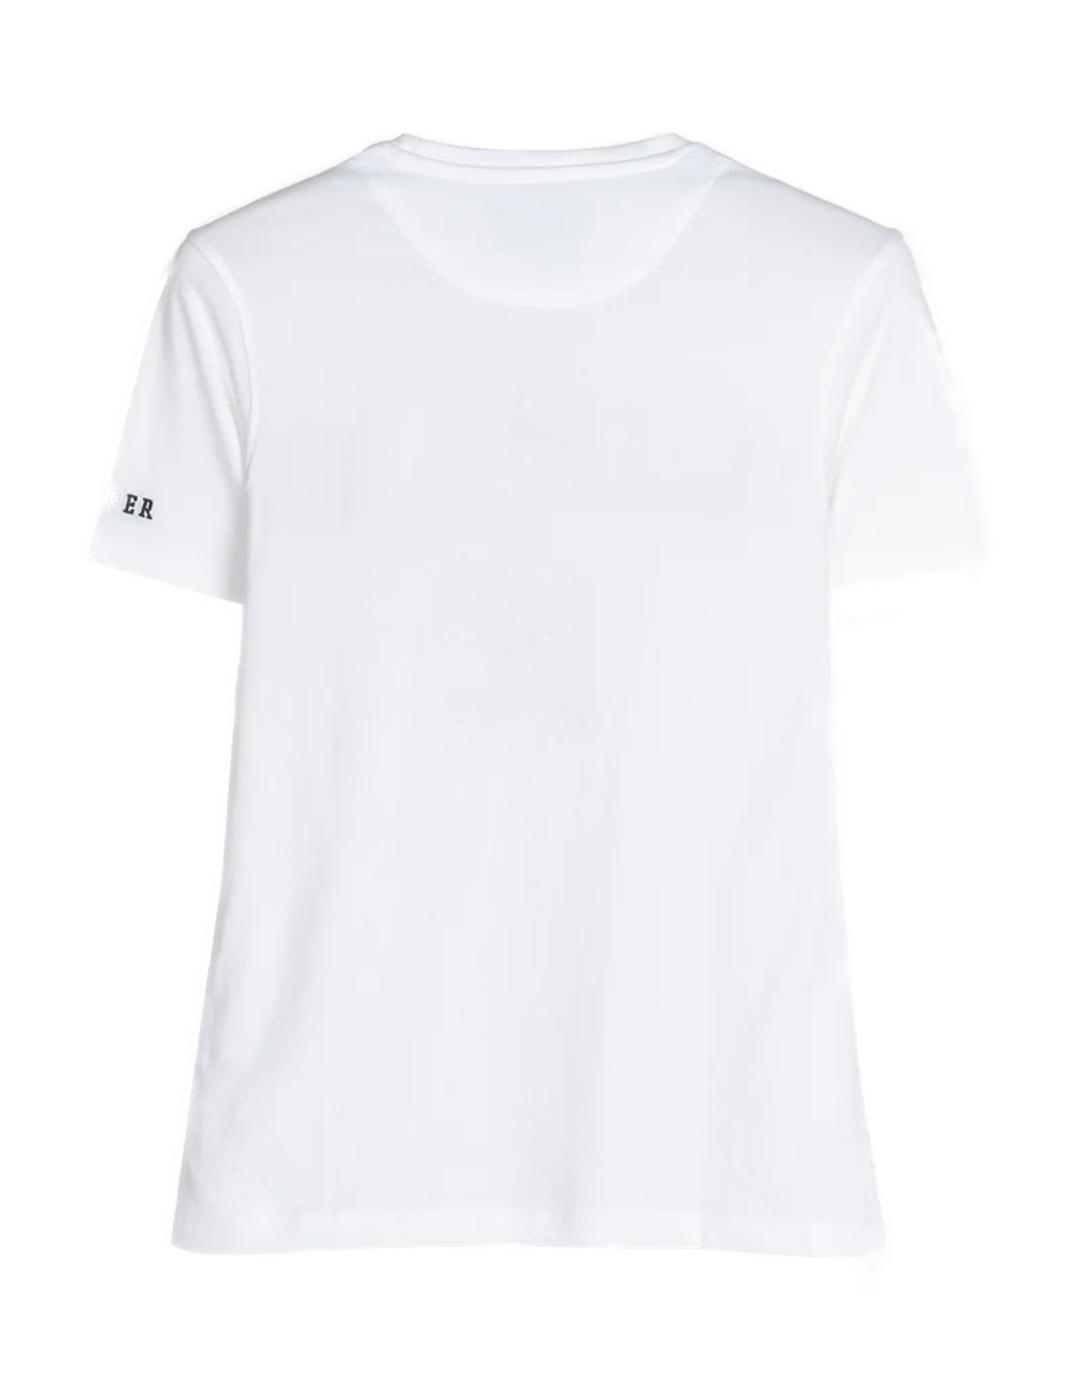 Camiseta Harper Retro blanco manga corta para hombre